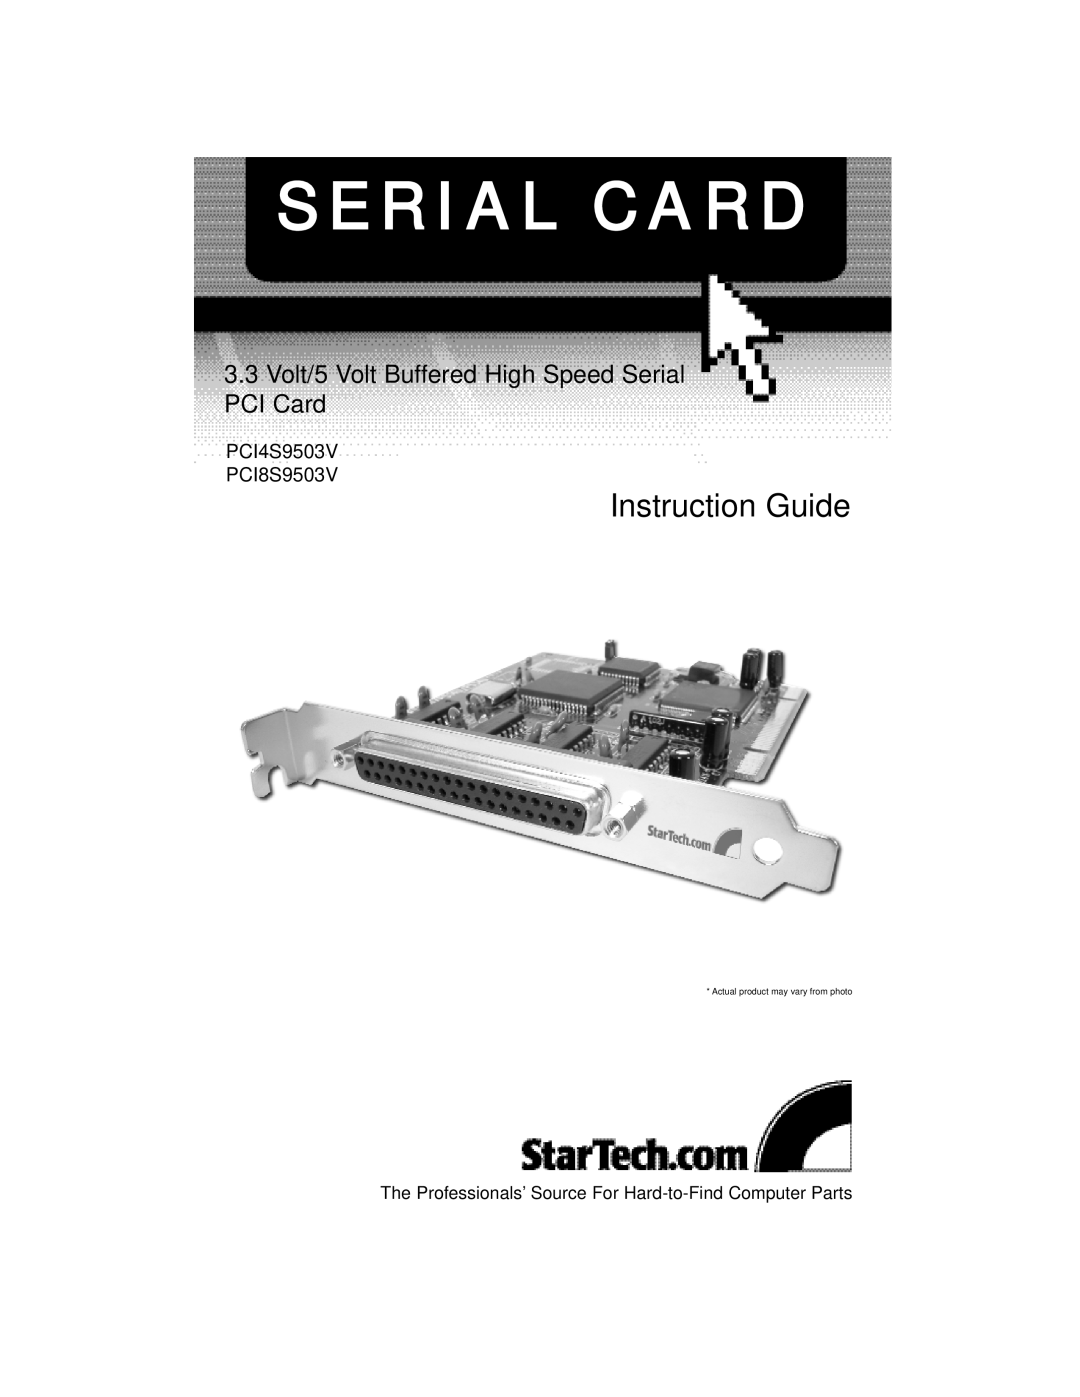 StarTech.com PCI8S9503V, PCI4S9503V manual Serial Card, Instruction Guide, Volt/5 Volt Buffered High Speed Serial PCI Card 